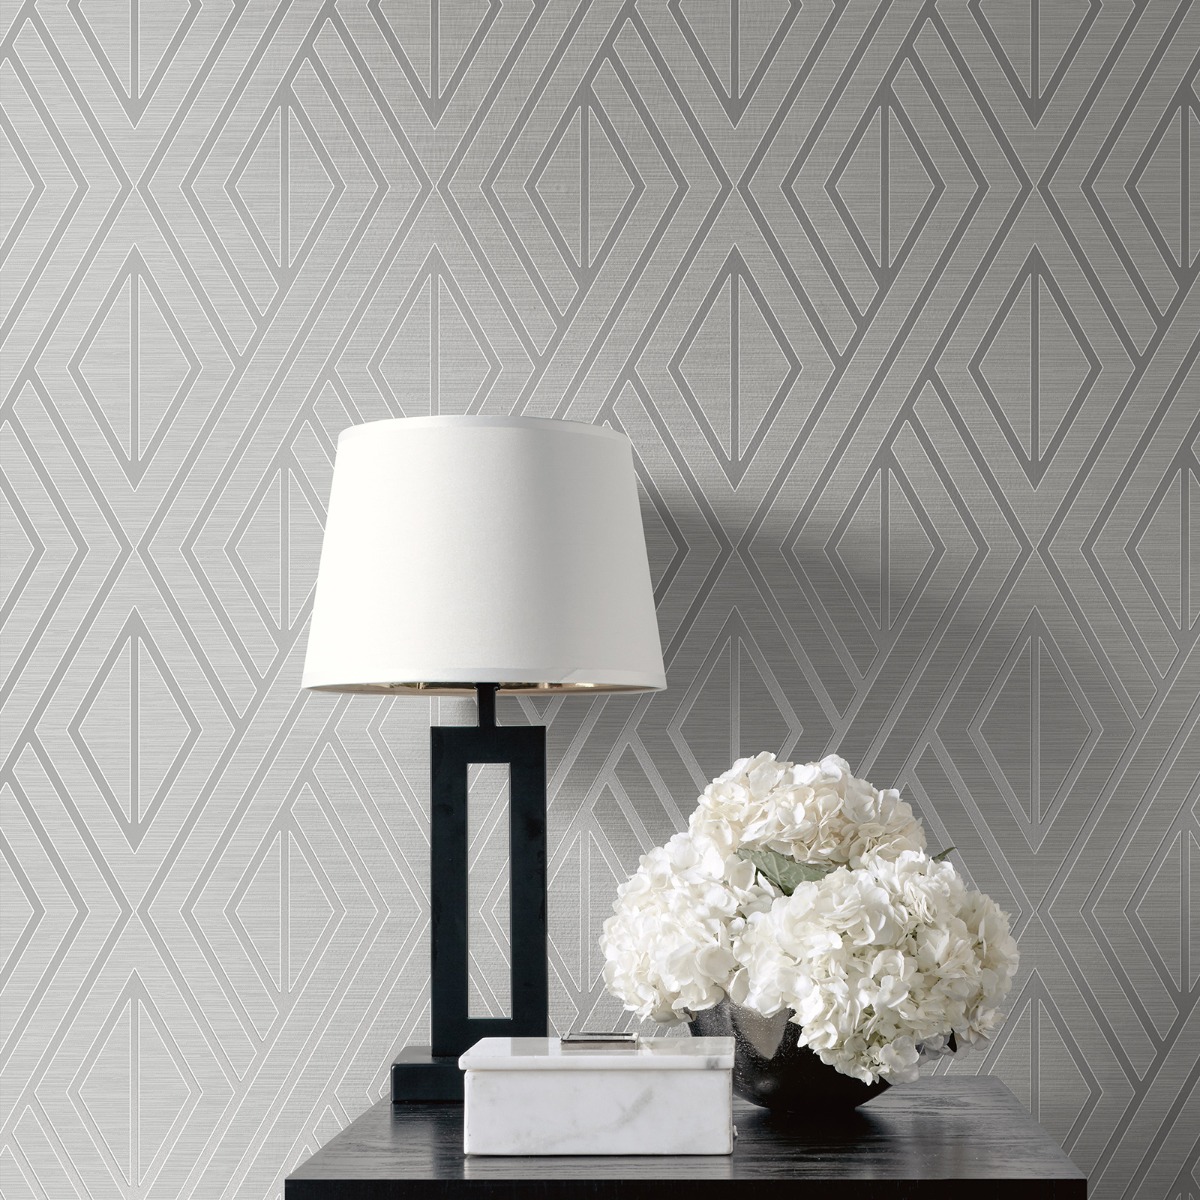 silver wallpaper pattern